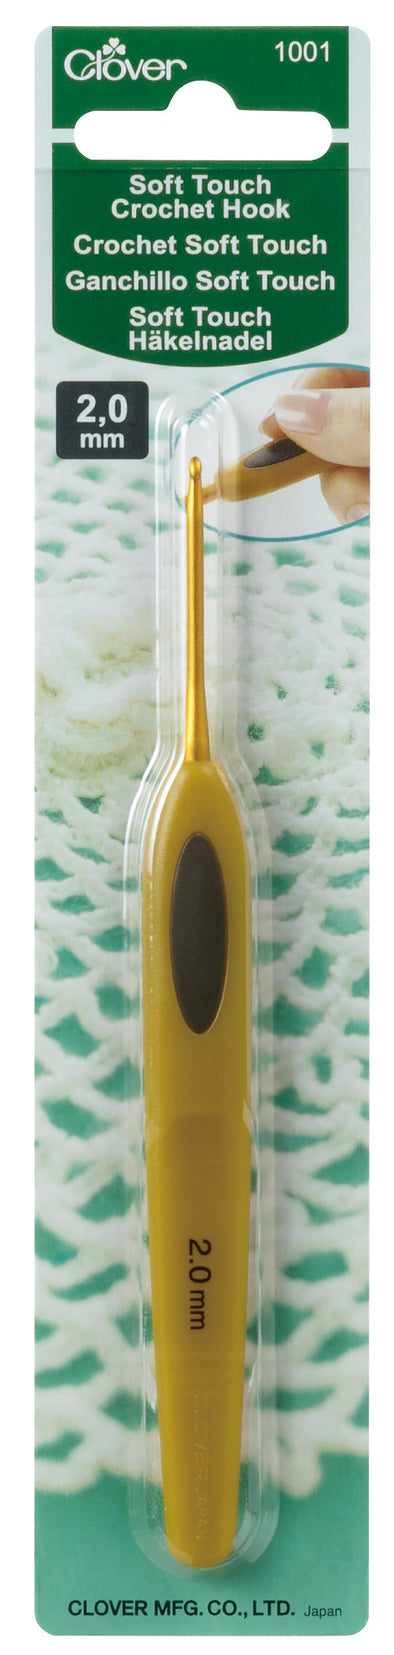 Clover Soft Touch Crochet Hooks (2.0mm)